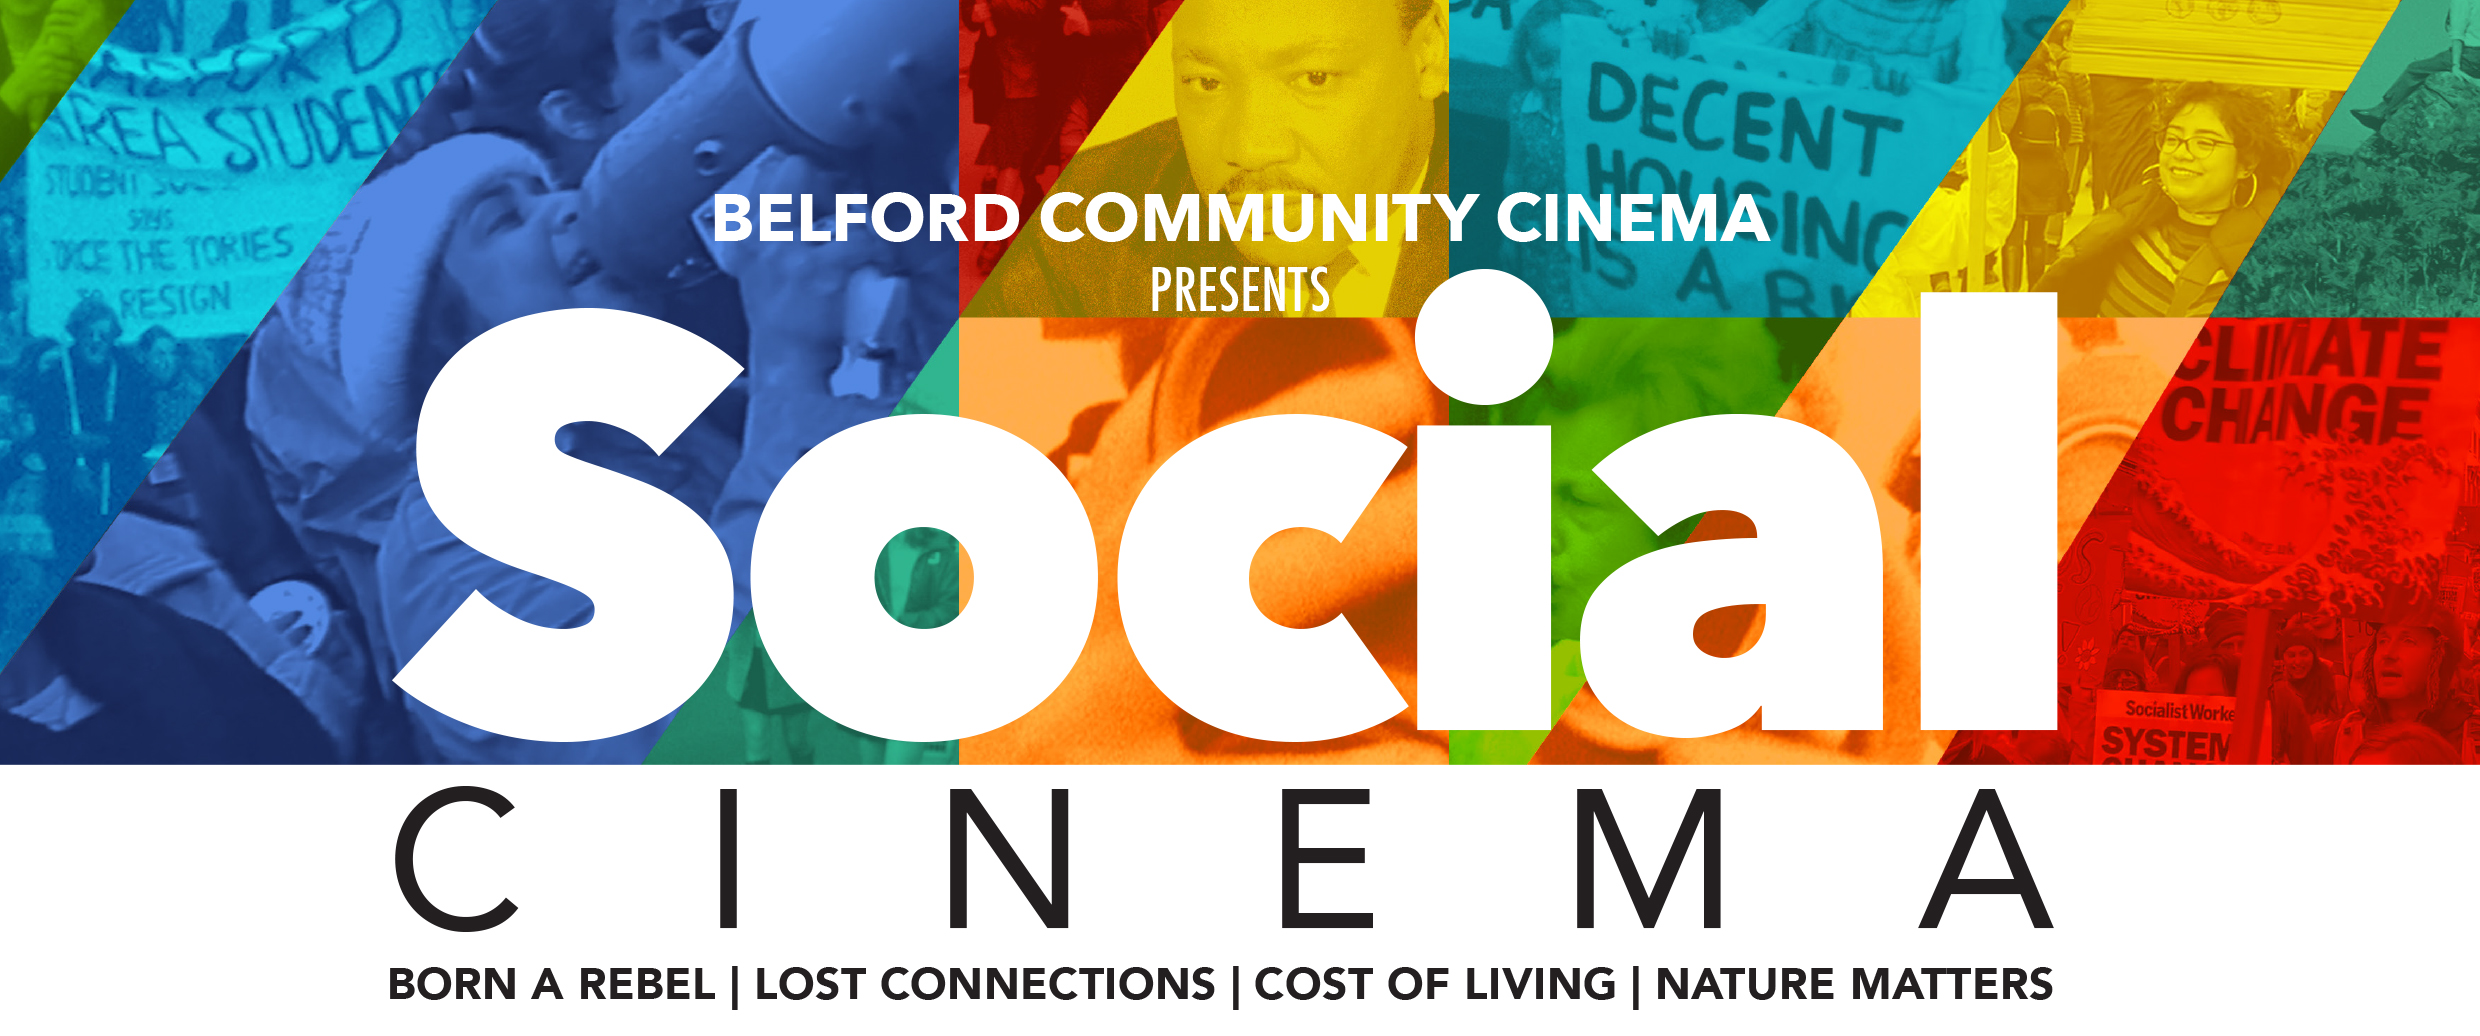 BELFORD COMMUNITY CINEMA -SOCIAL CINEMA